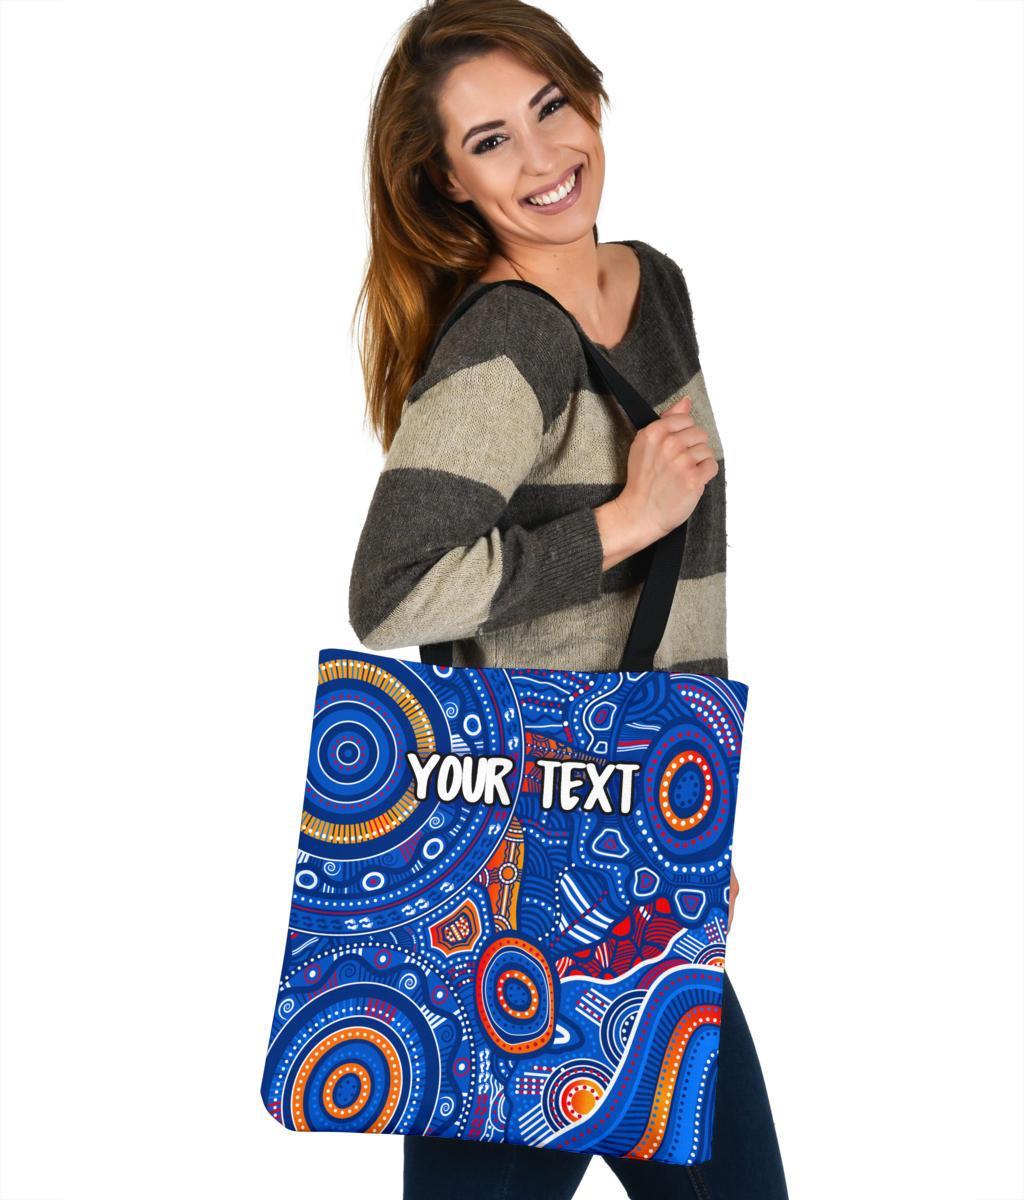 custom-text-aboriginal-tote-bags-indigenous-footprint-patterns-blue-color